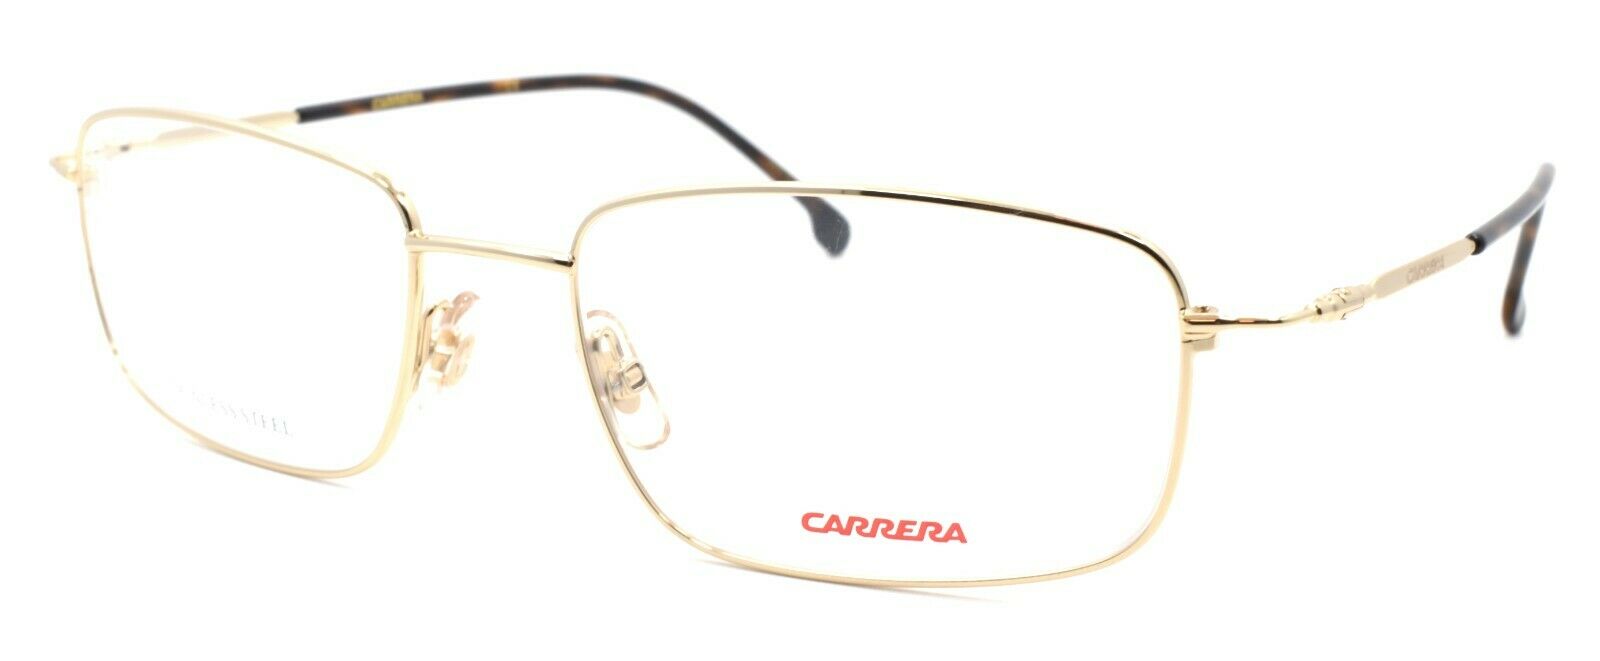 1-Carrera 146/V J5G Men's Eyeglasses Frames 53-18-140 Gold + CASE-762753066275-IKSpecs